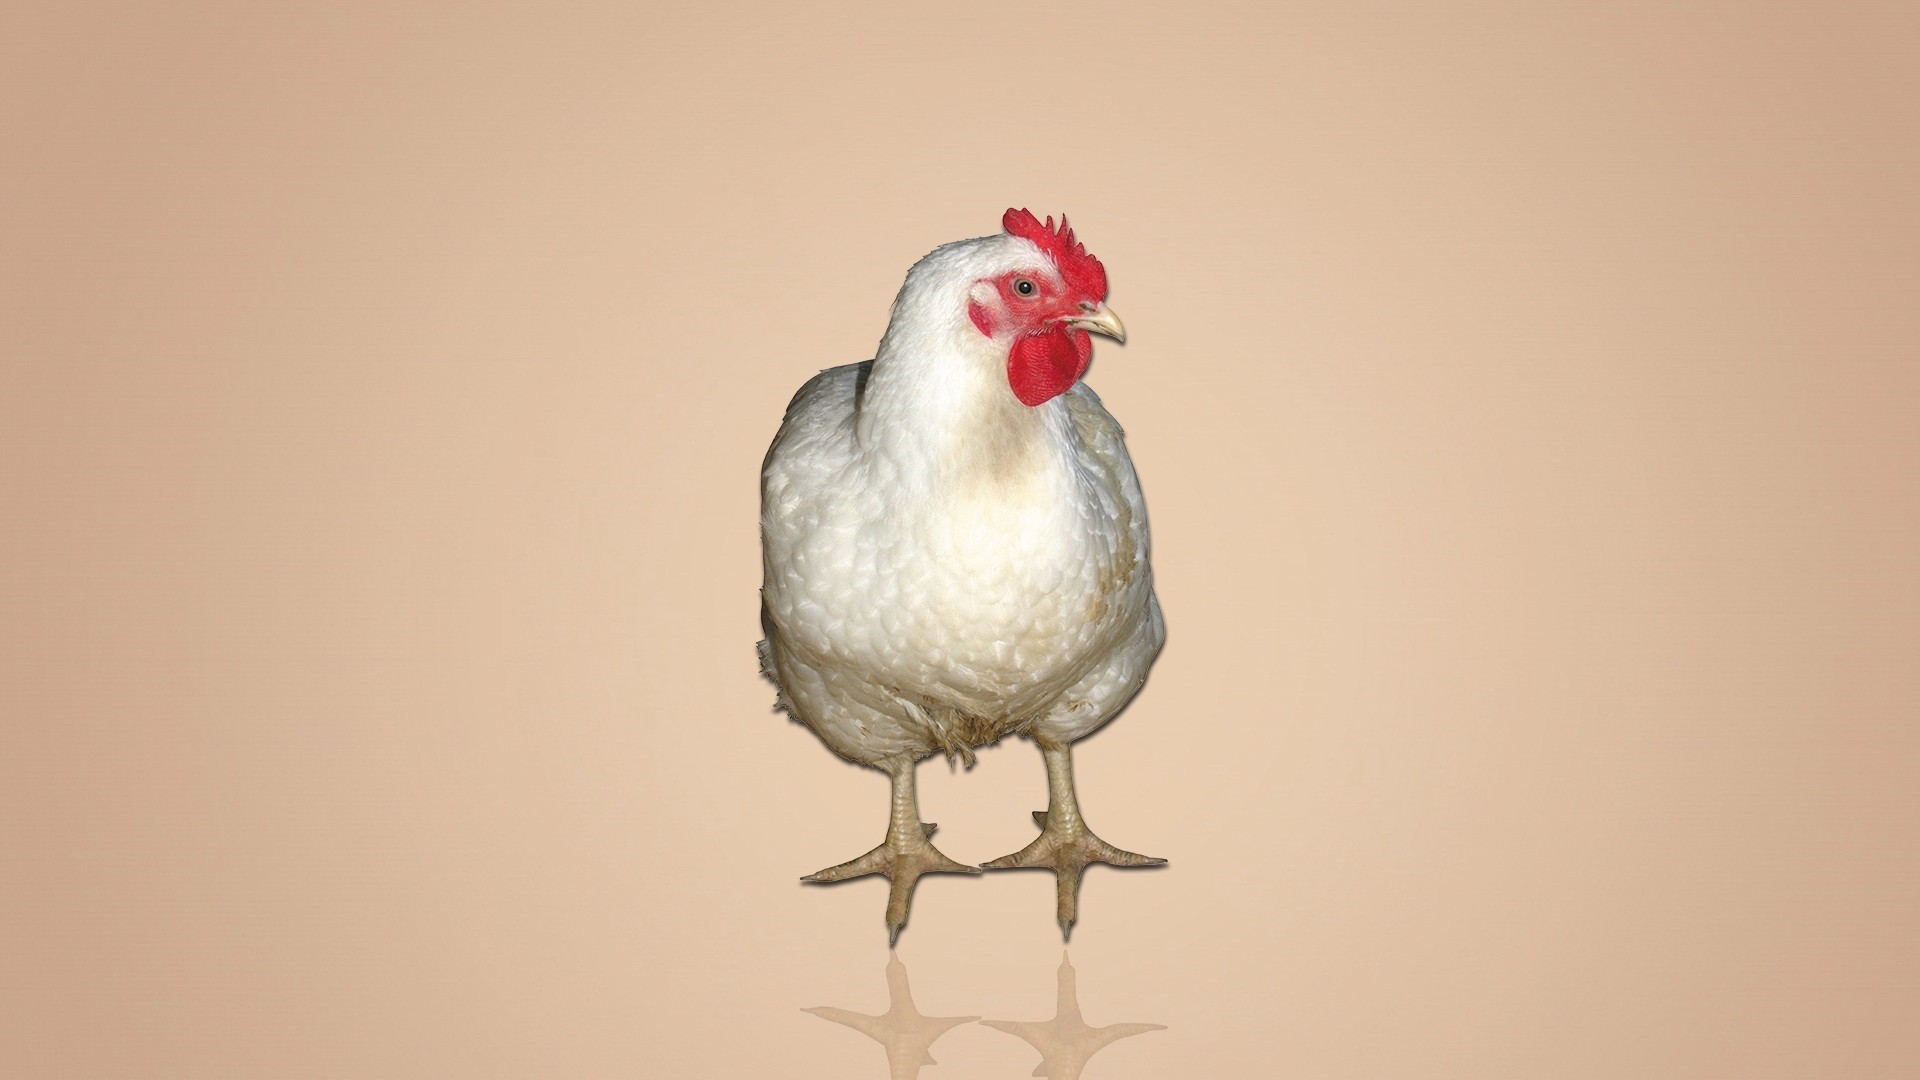 Chicken hd wallpaper download